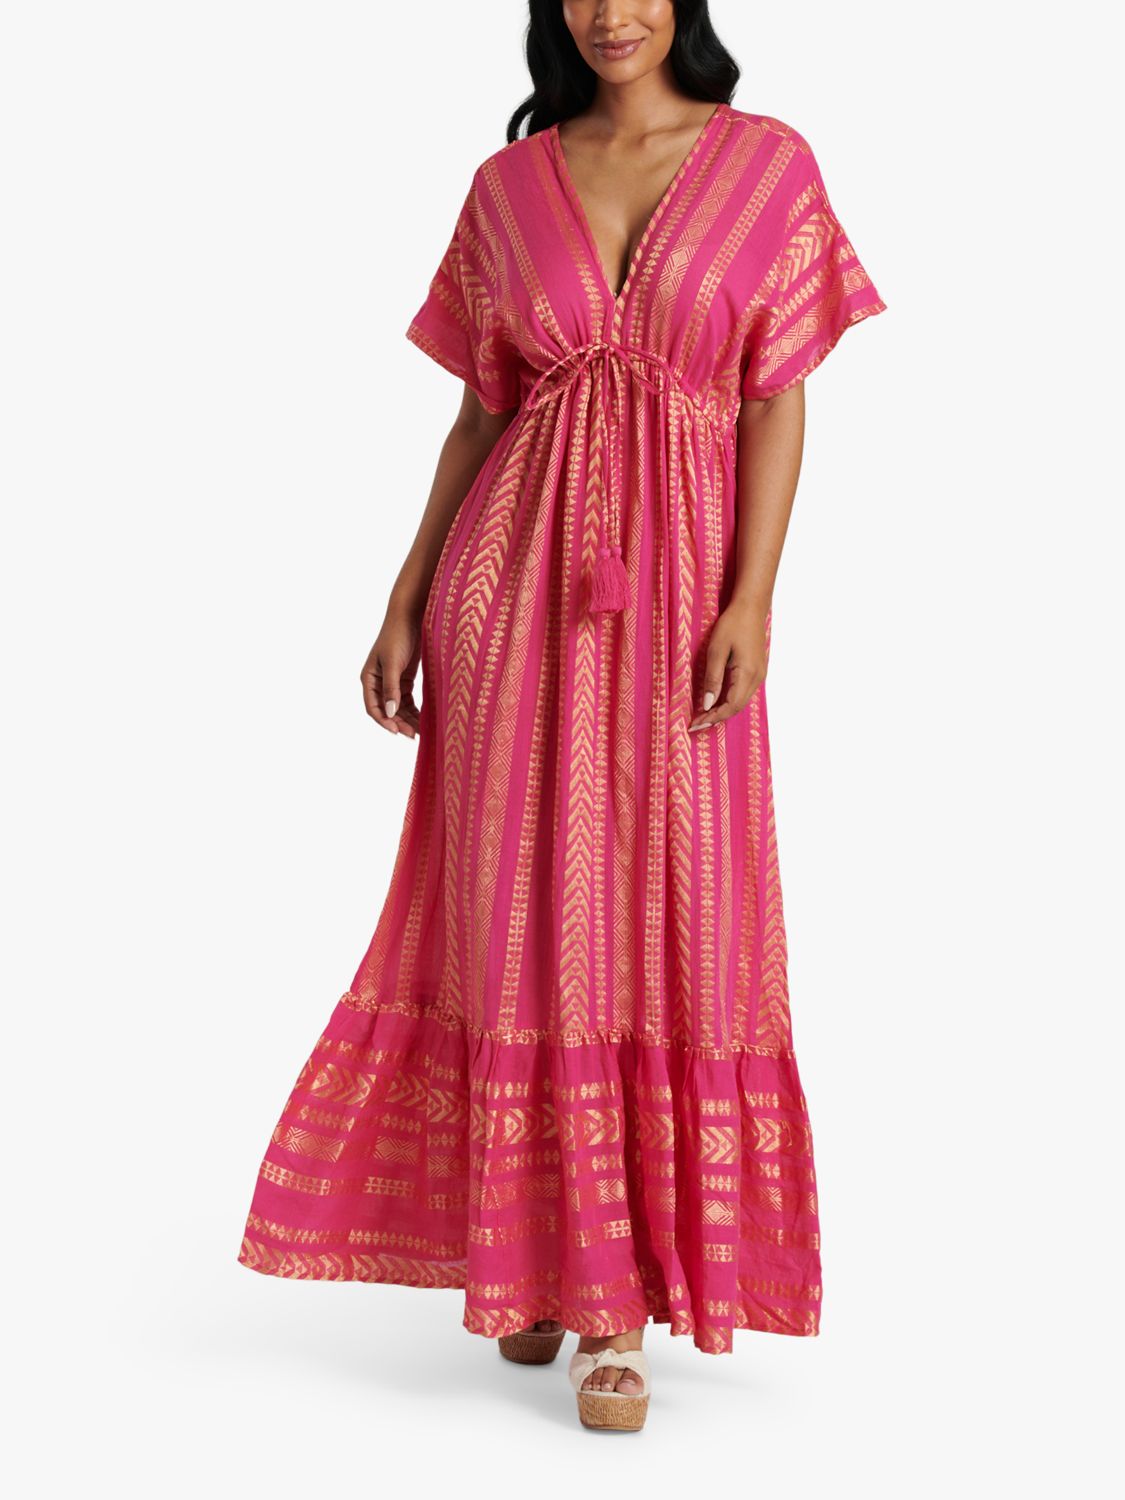 South Beach Metallic Jacquard V-Neck Maxi Dress, Pink/Gold, 10